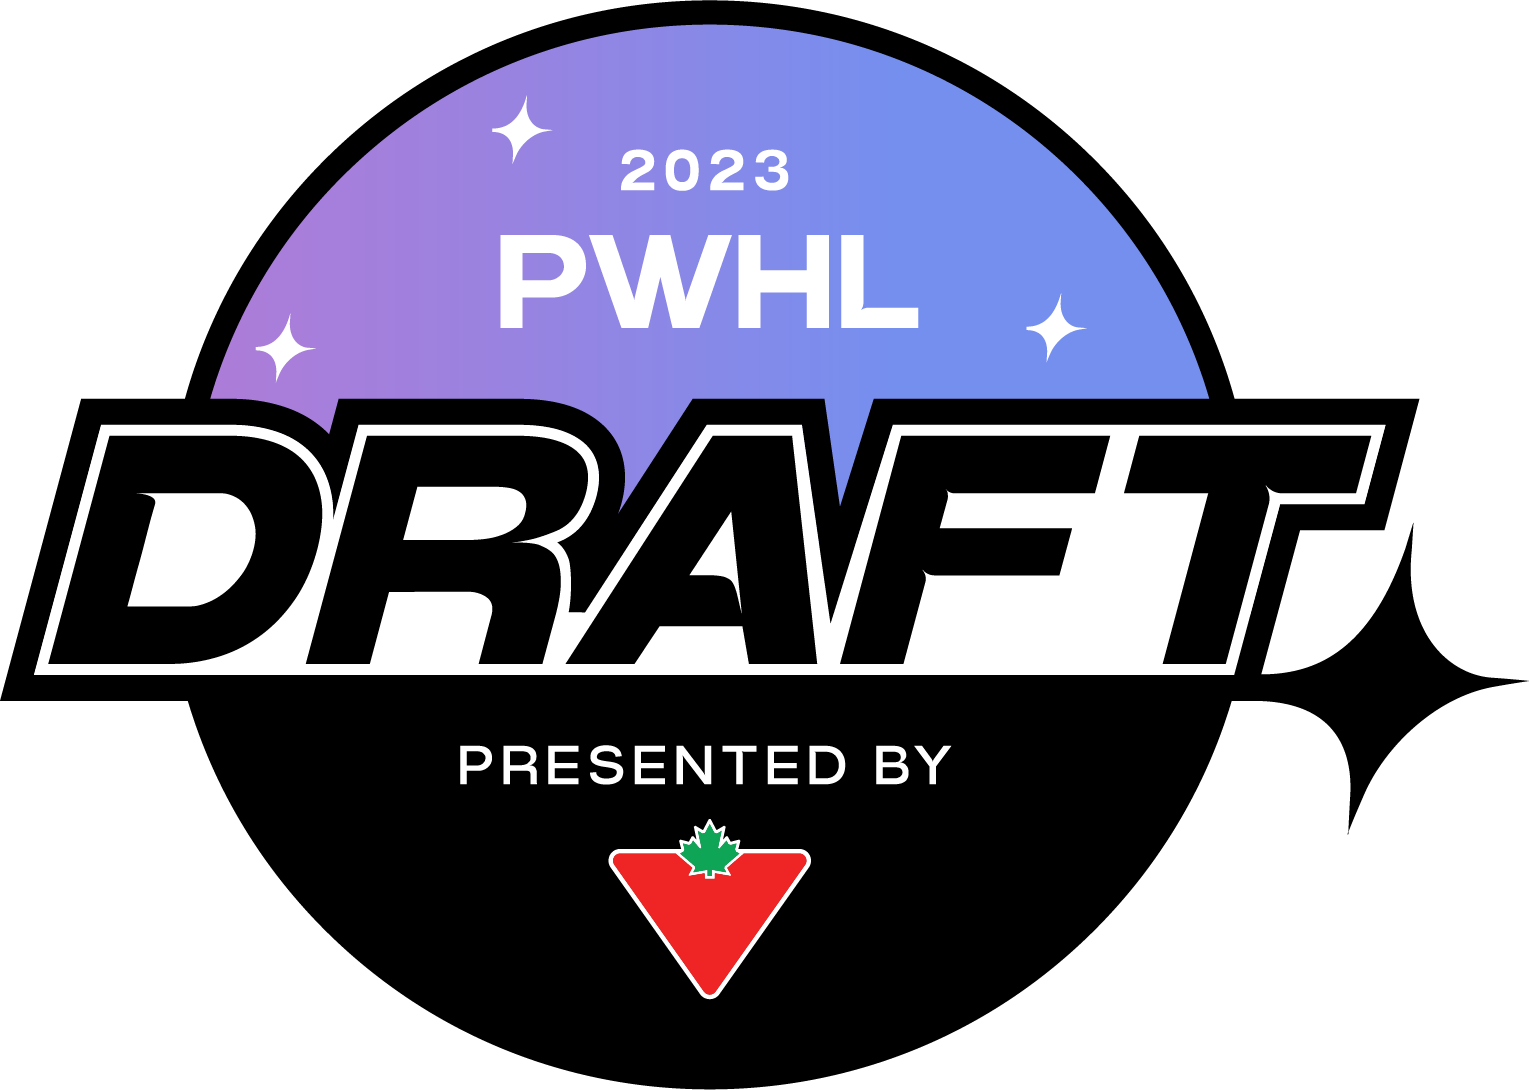 PWHL Coach Announcements; PWHL Draft Forecast: Minnesota and Ottawa